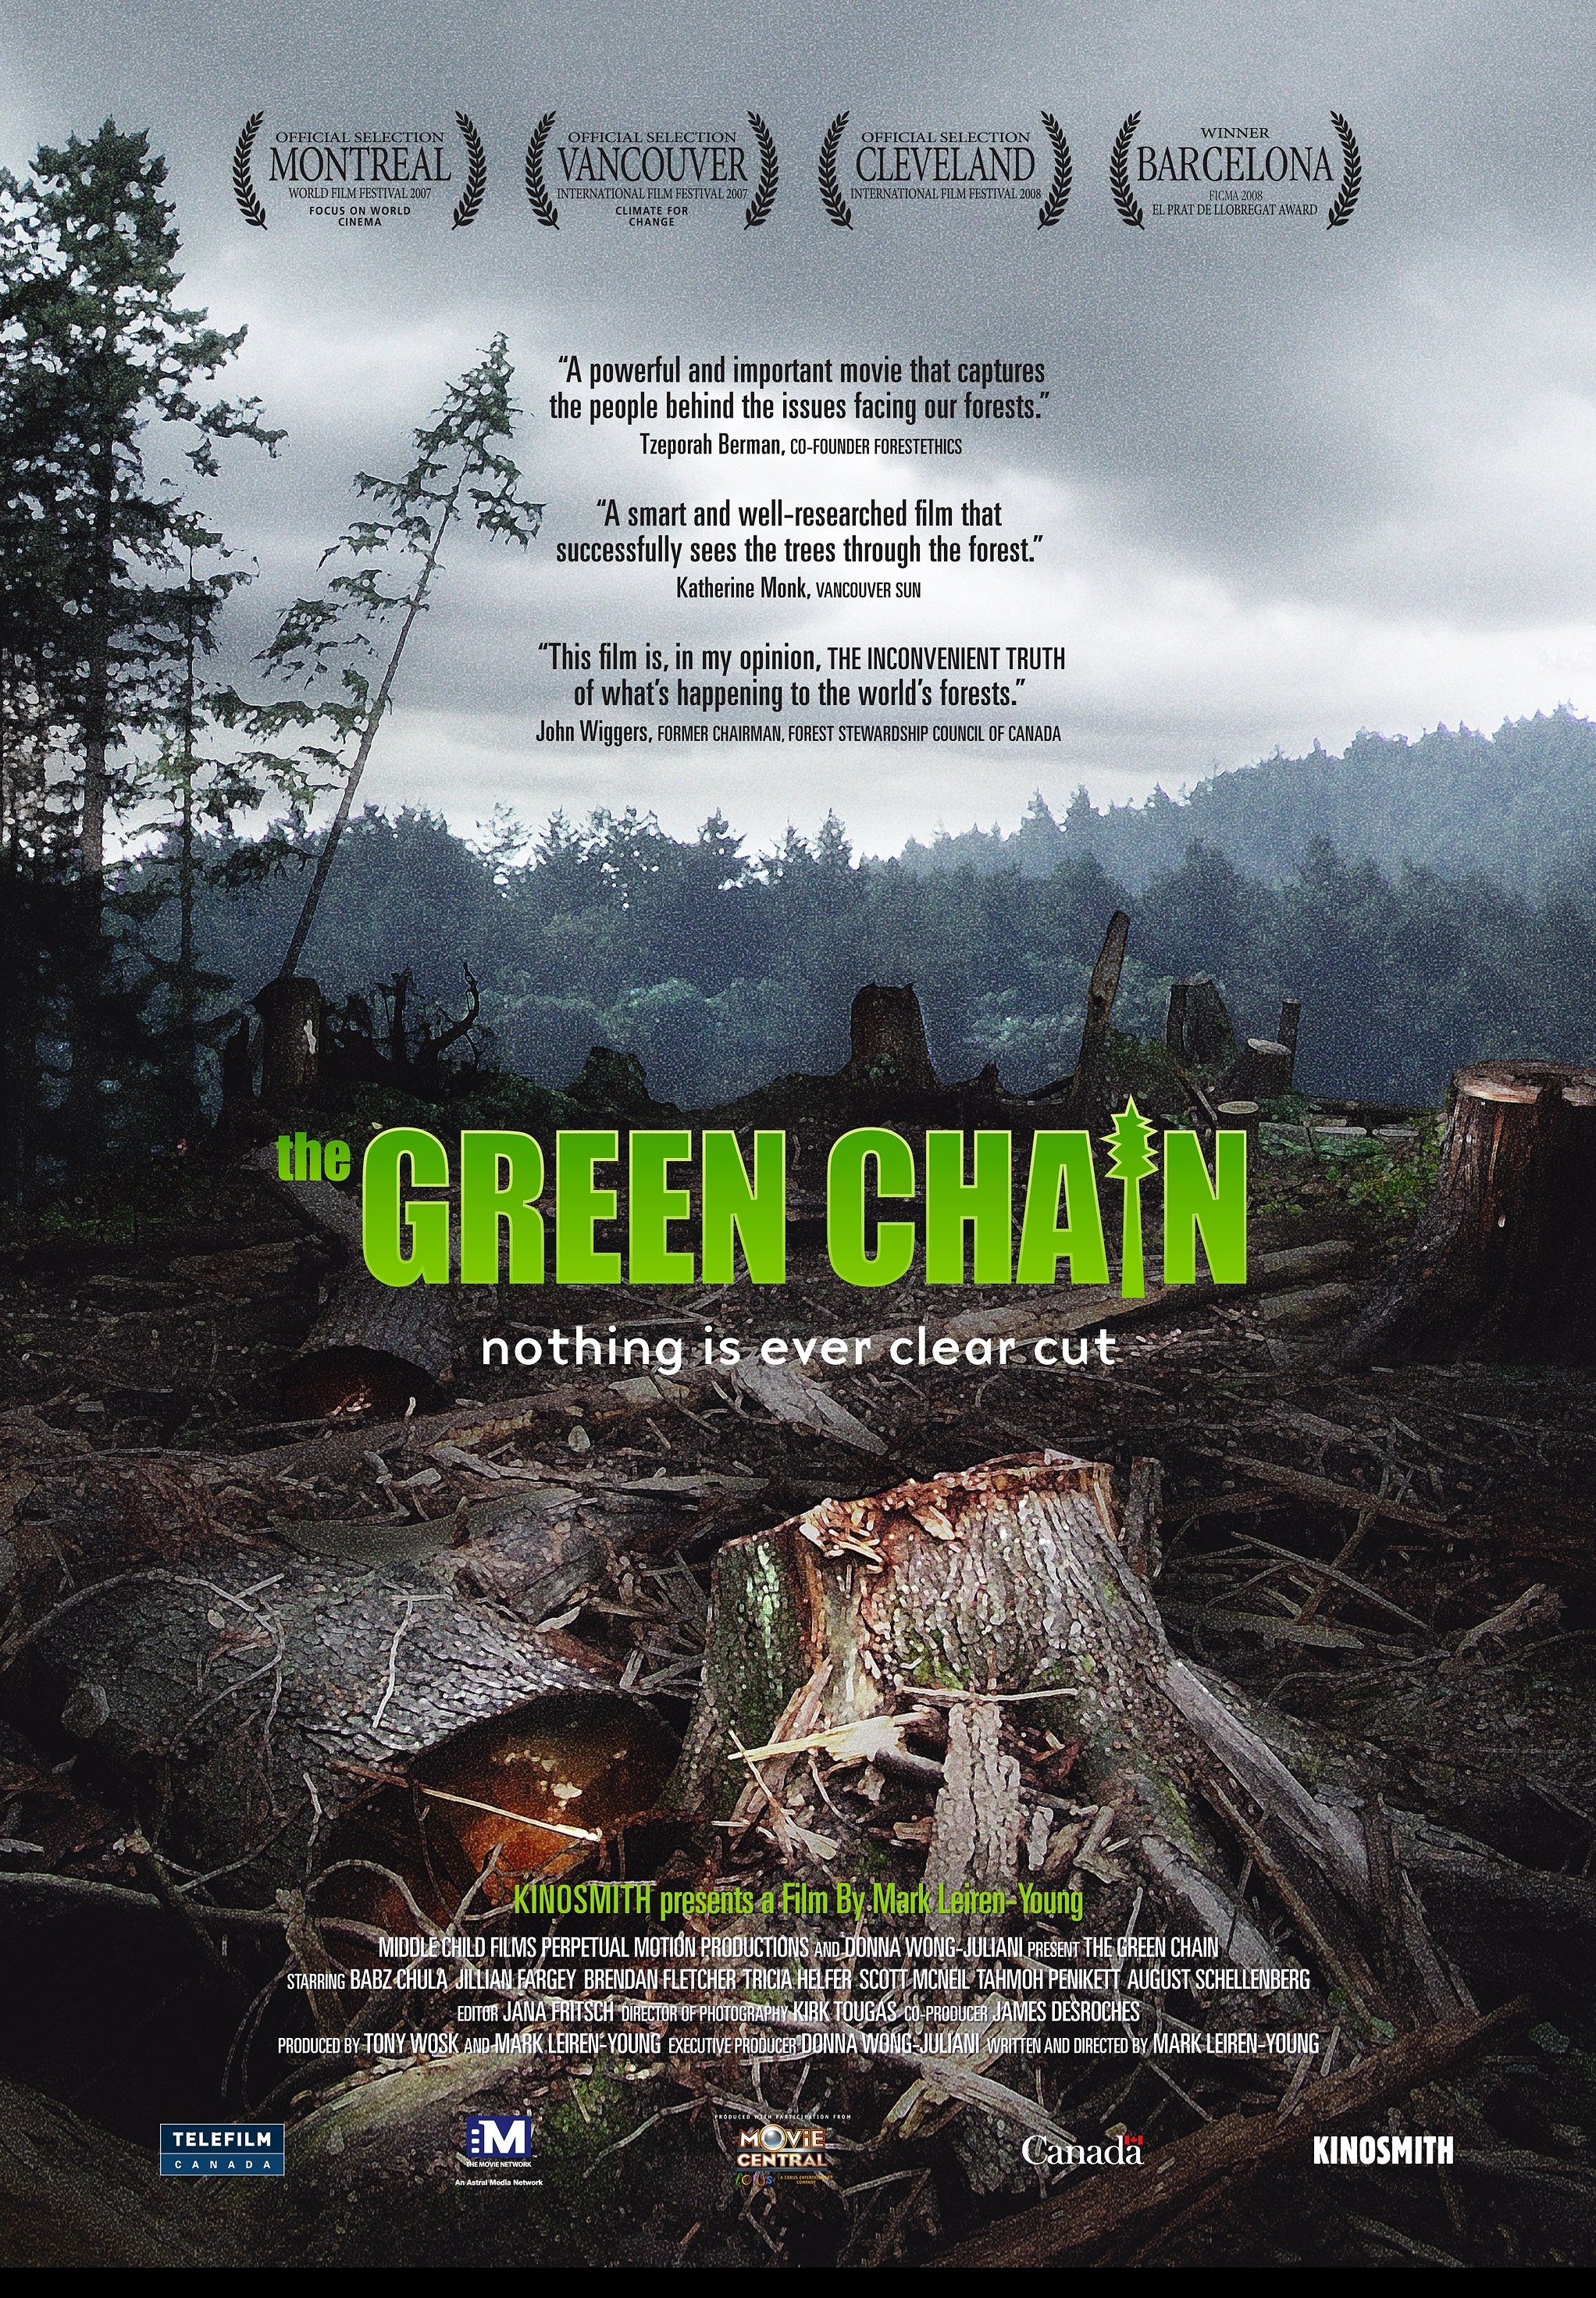 The Green Chain (2007) Screenshot 2 